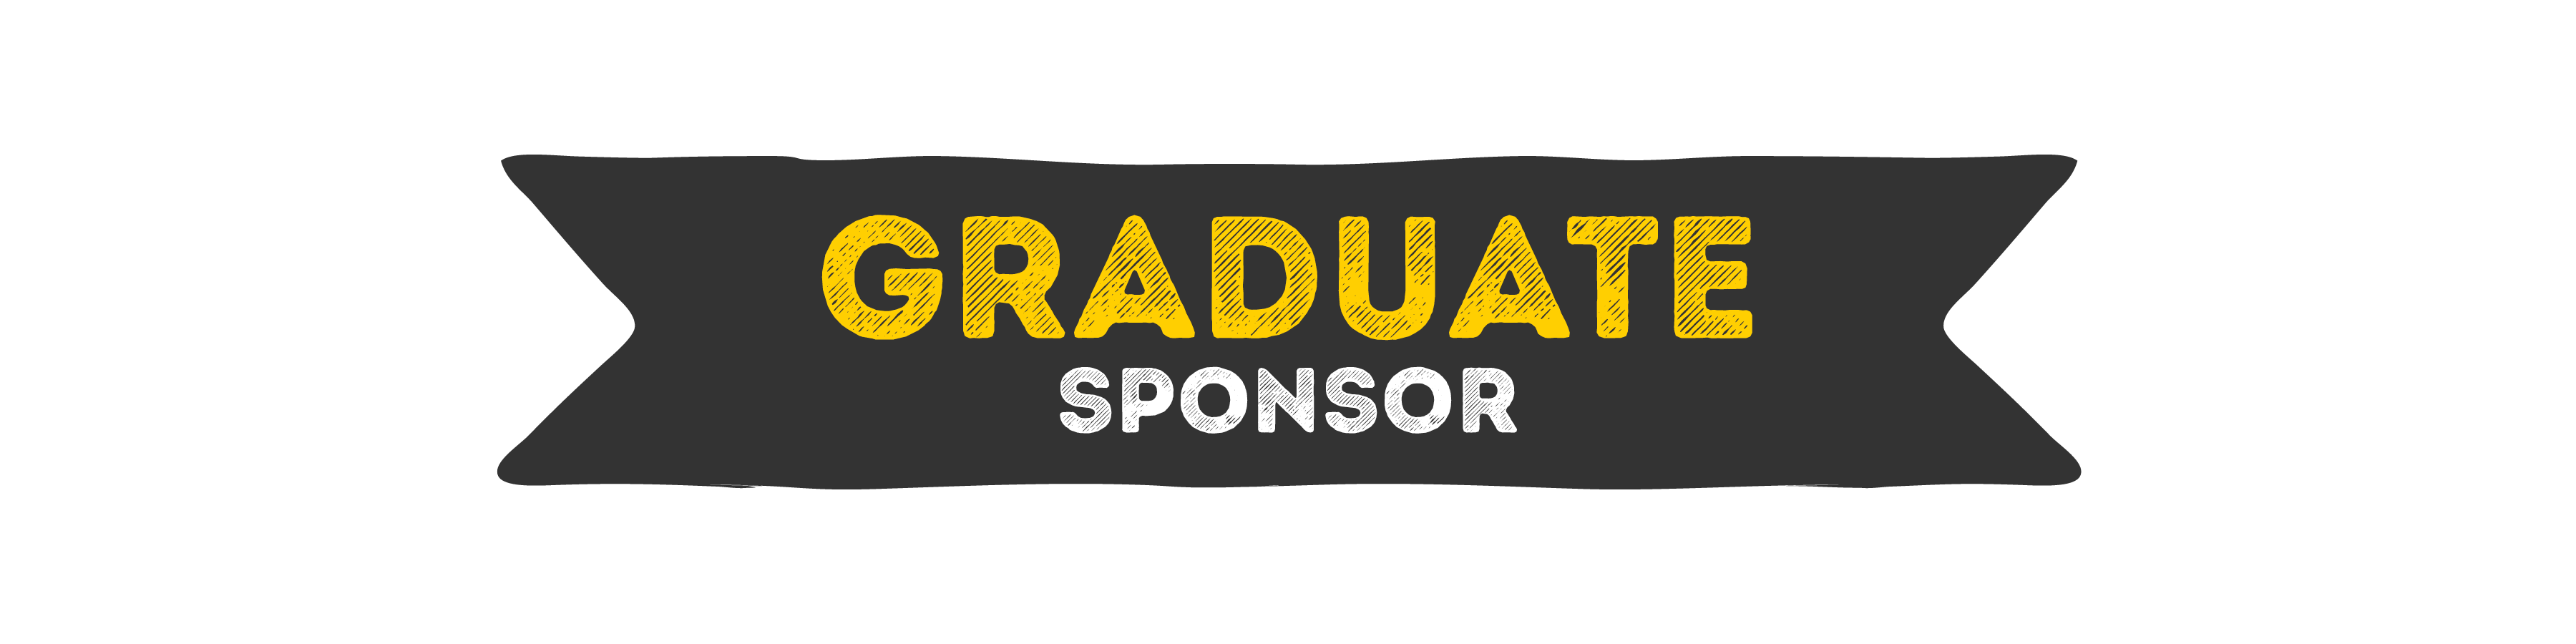 Q-give graduate sponsors header.png